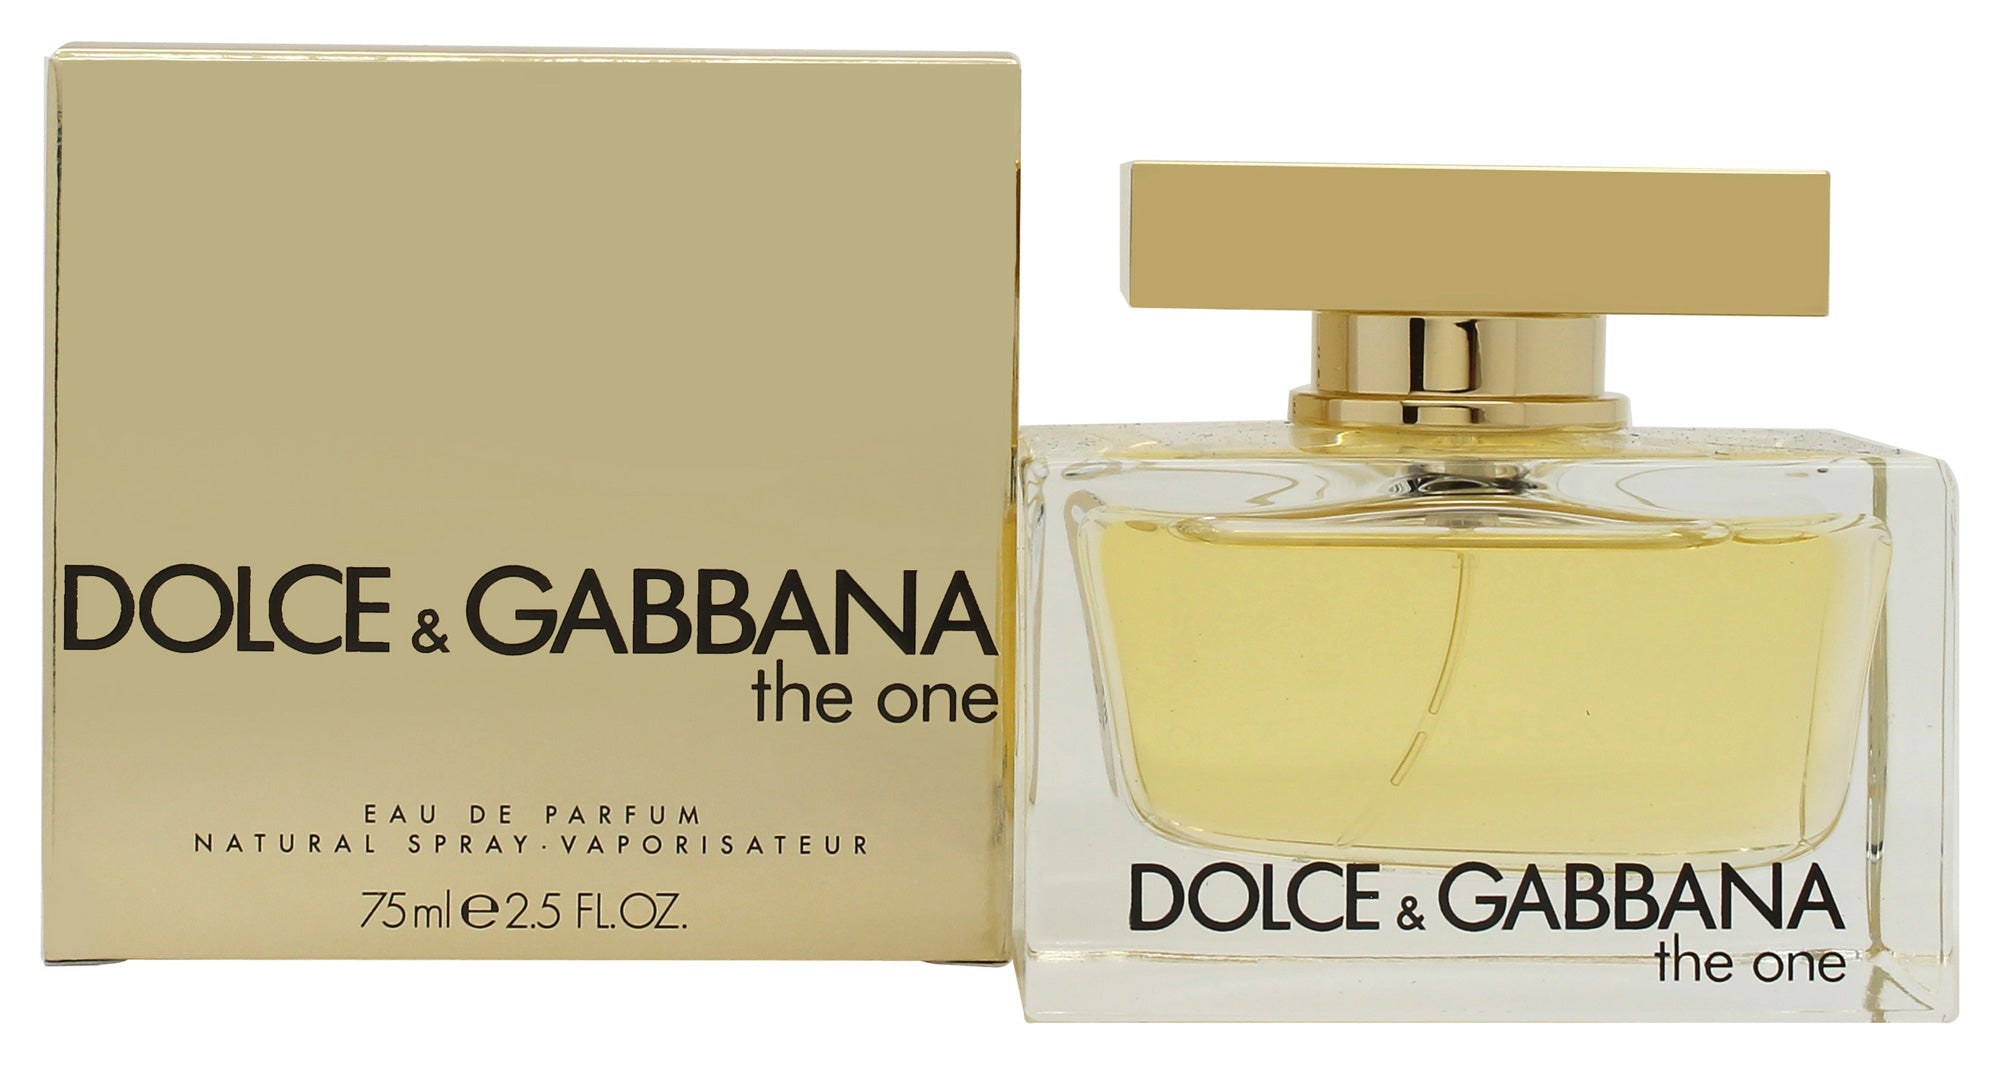 View Dolce Gabbana The One Eau de Parfum 75ml Sprej information